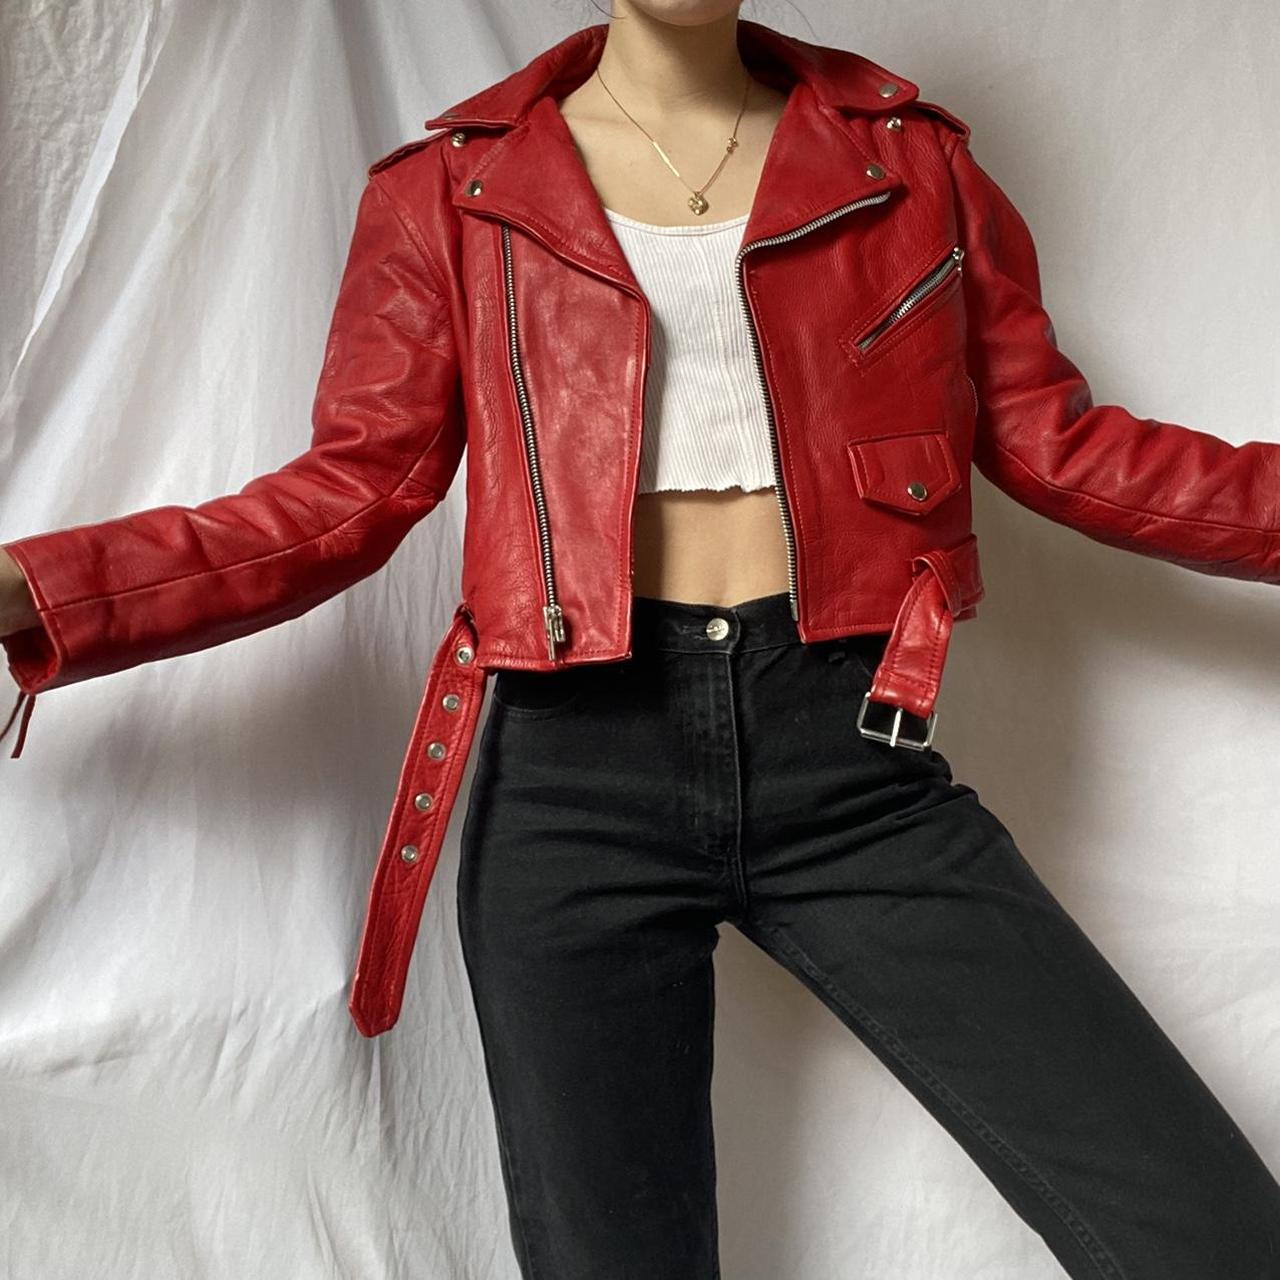 Vintage red leather biker jacket from Diamond... - Depop